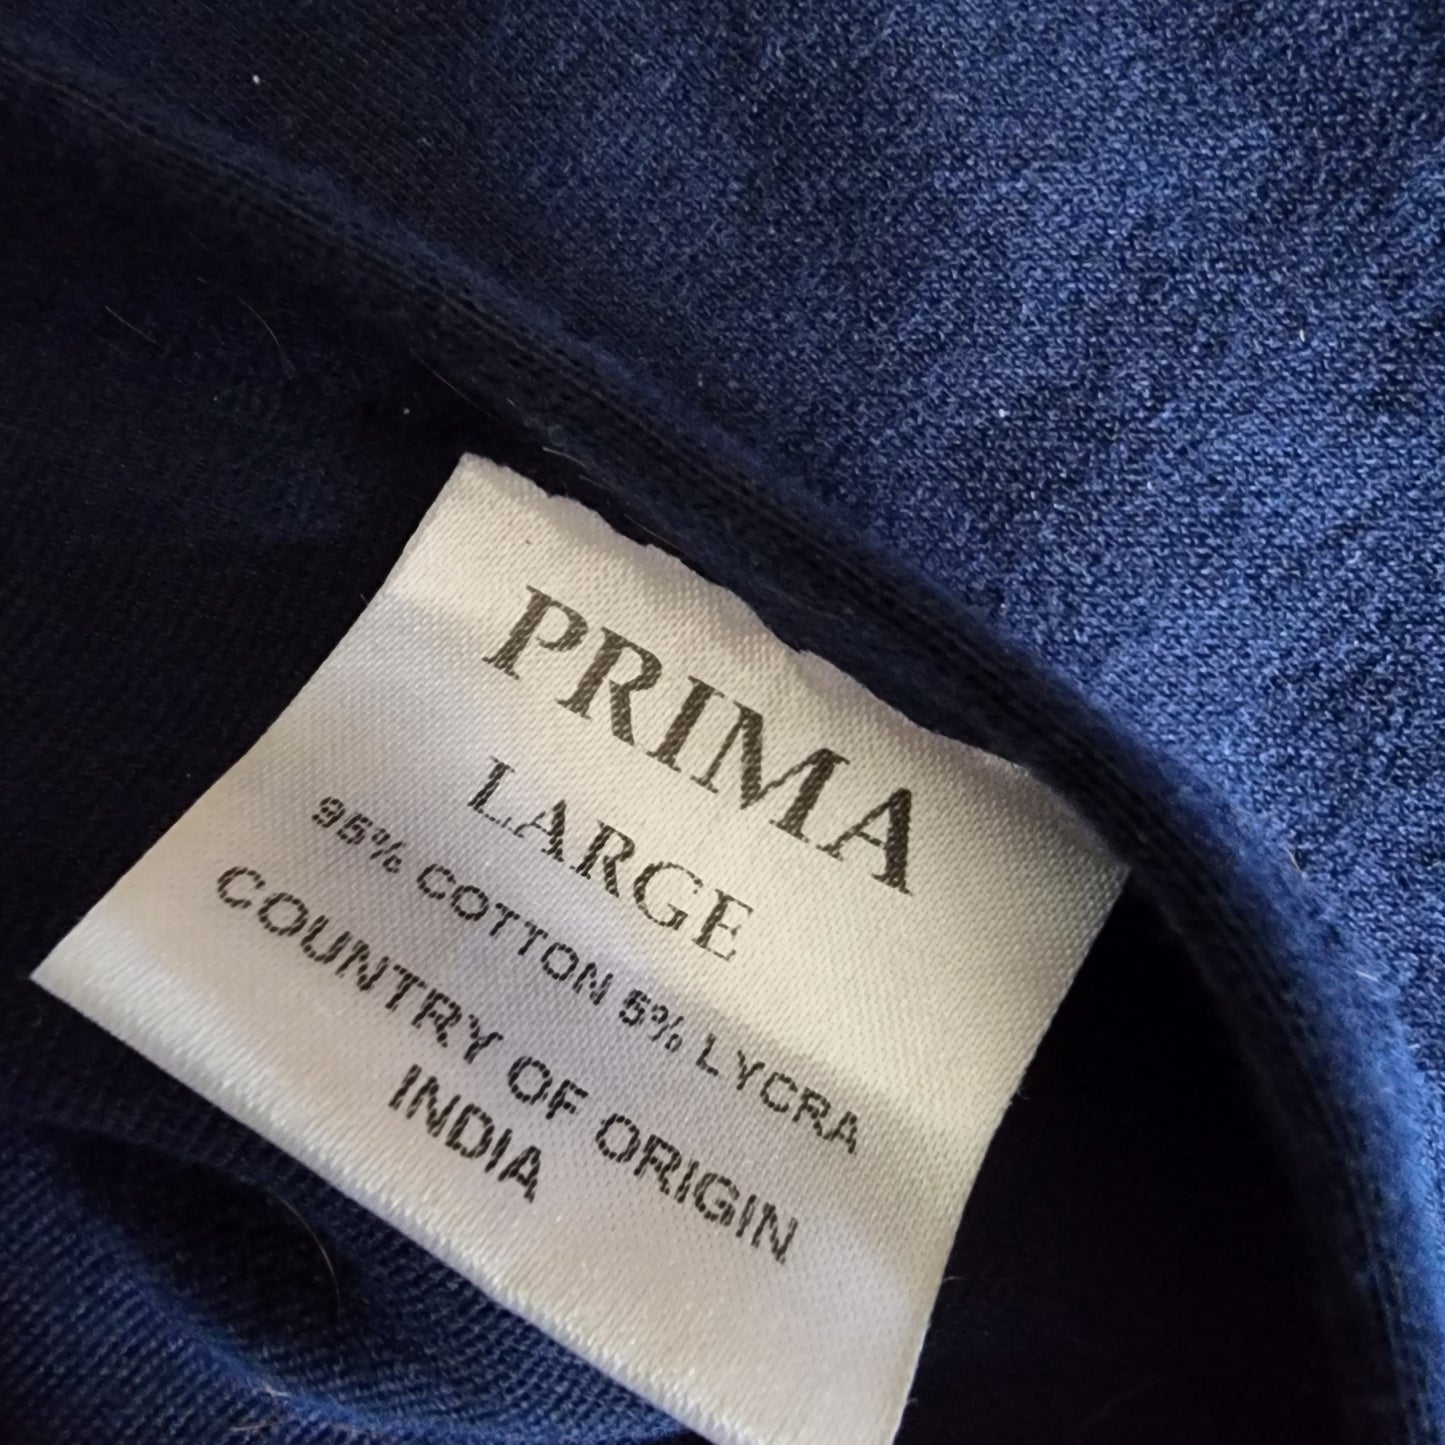 Prima navy cotton show hood. Full size